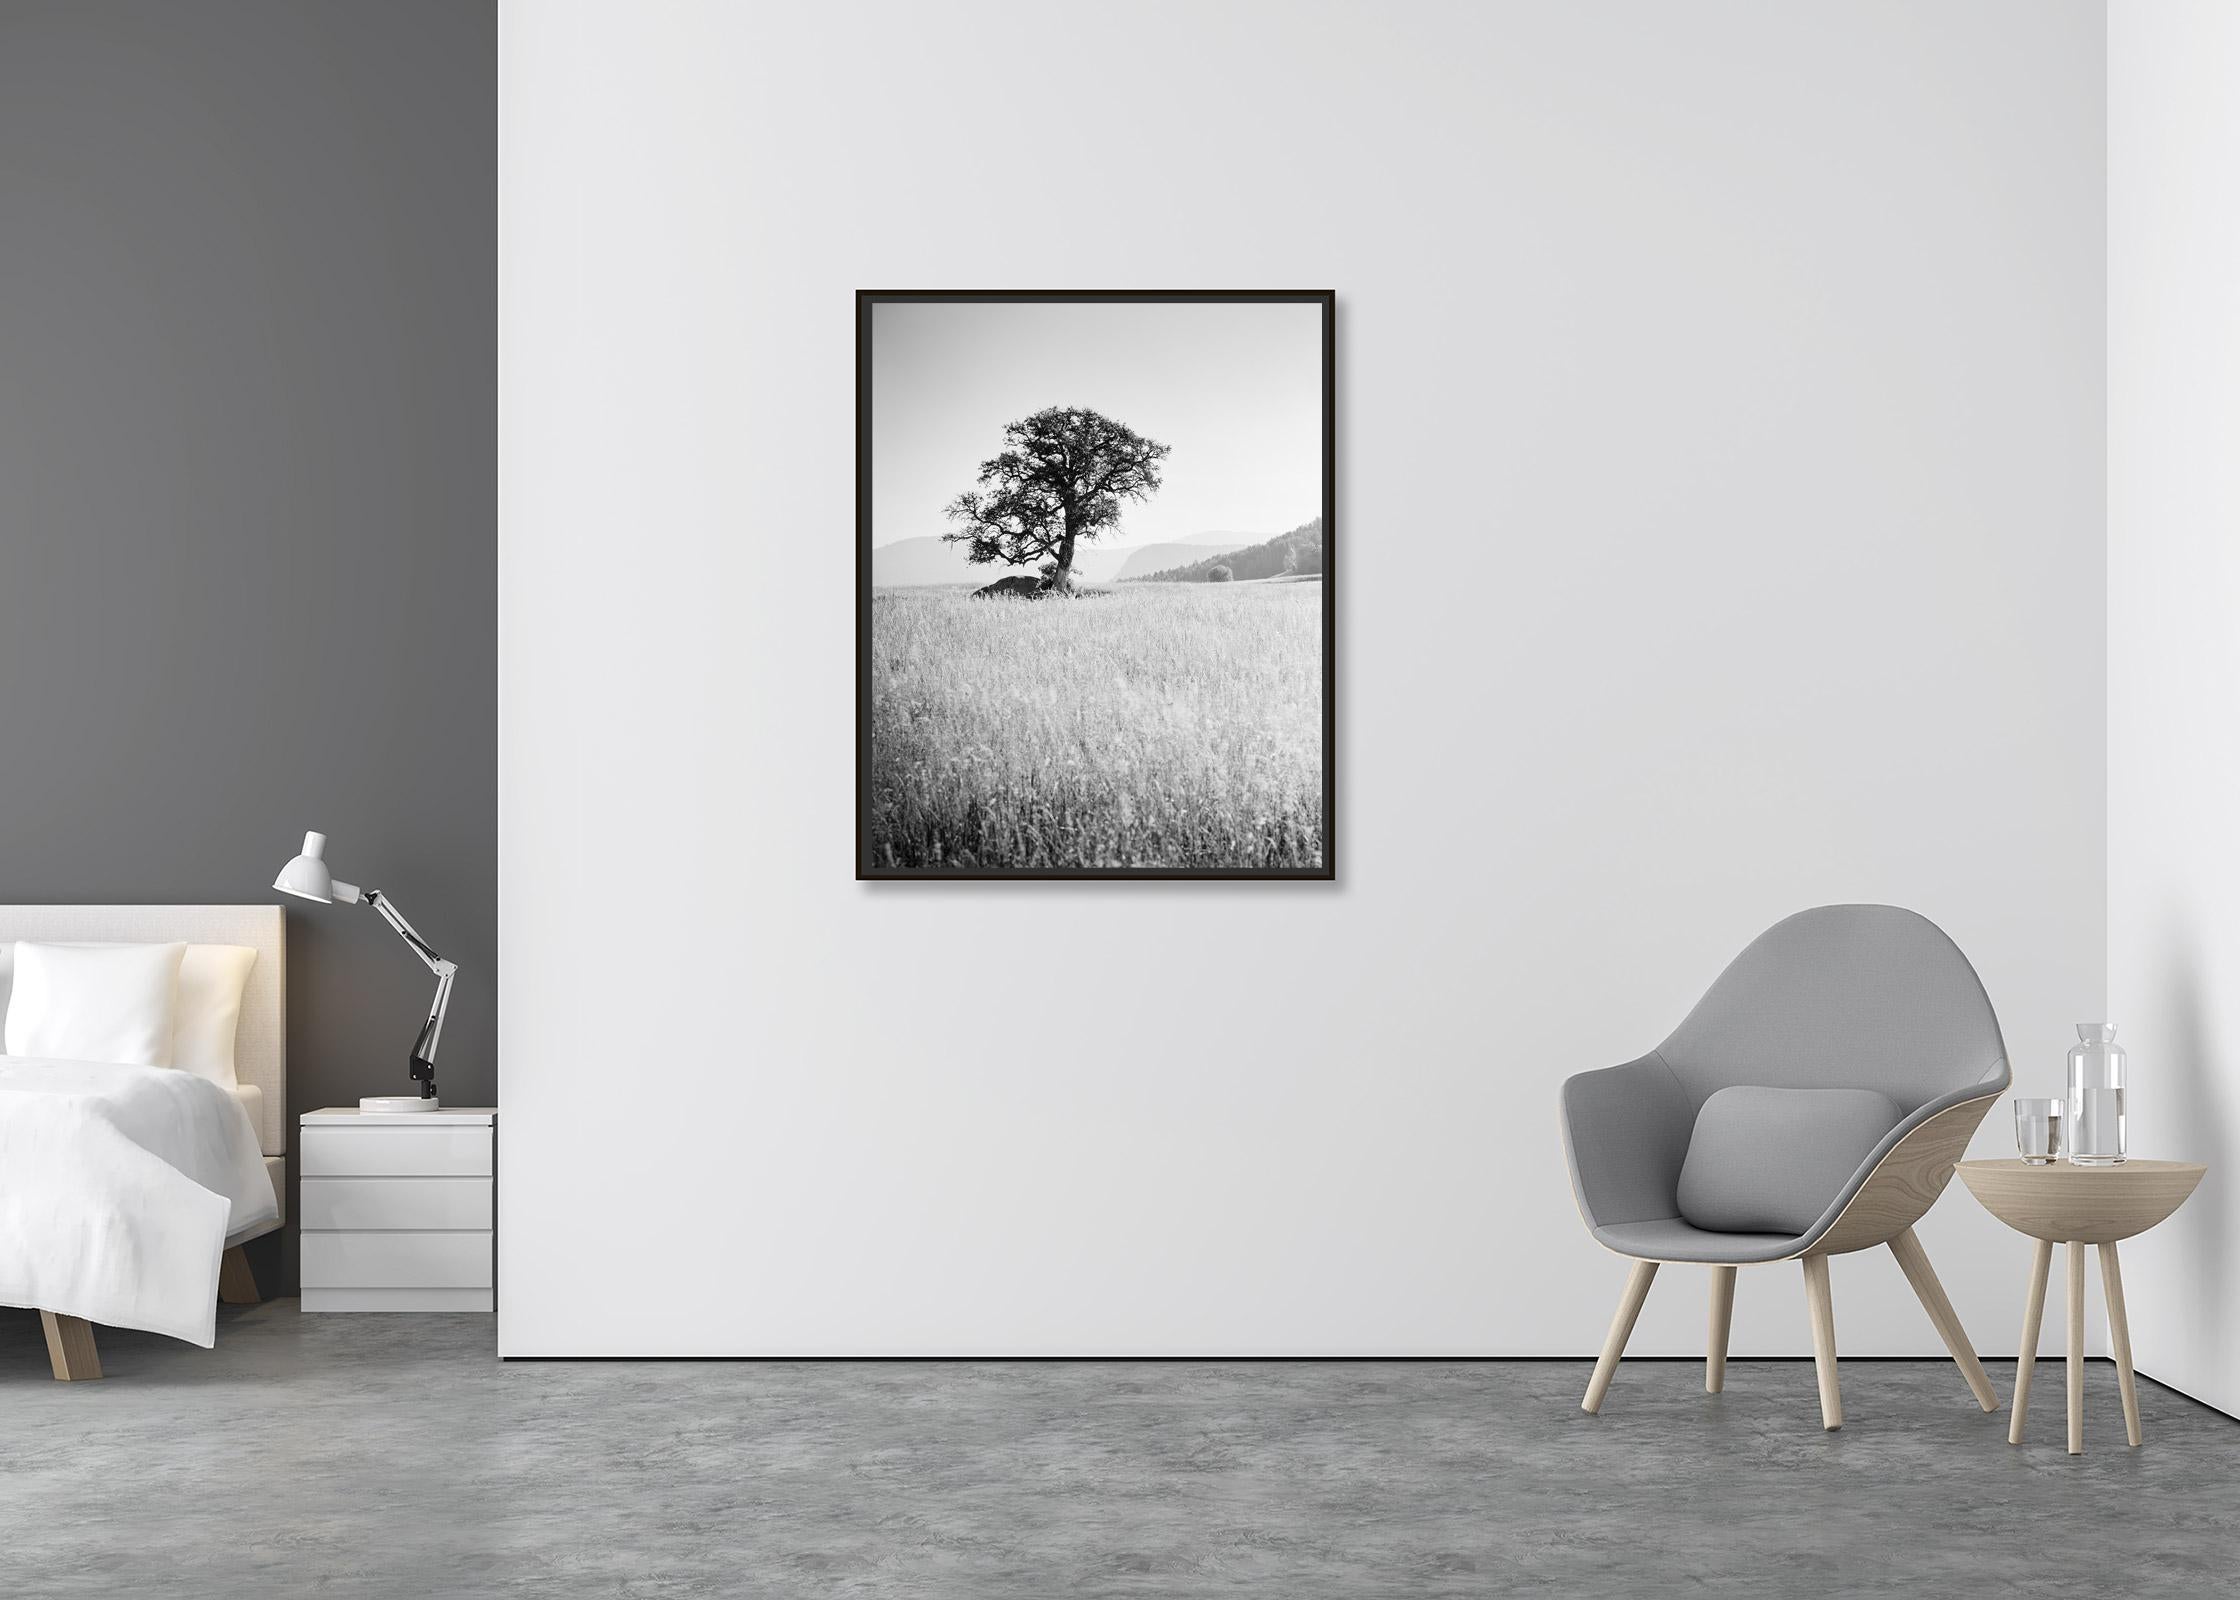 Morning Sun, Single Tree, Bolzano, Italy,  black and white art photo, landscapes - Contemporary Photograph by Gerald Berghammer, Ina Forstinger